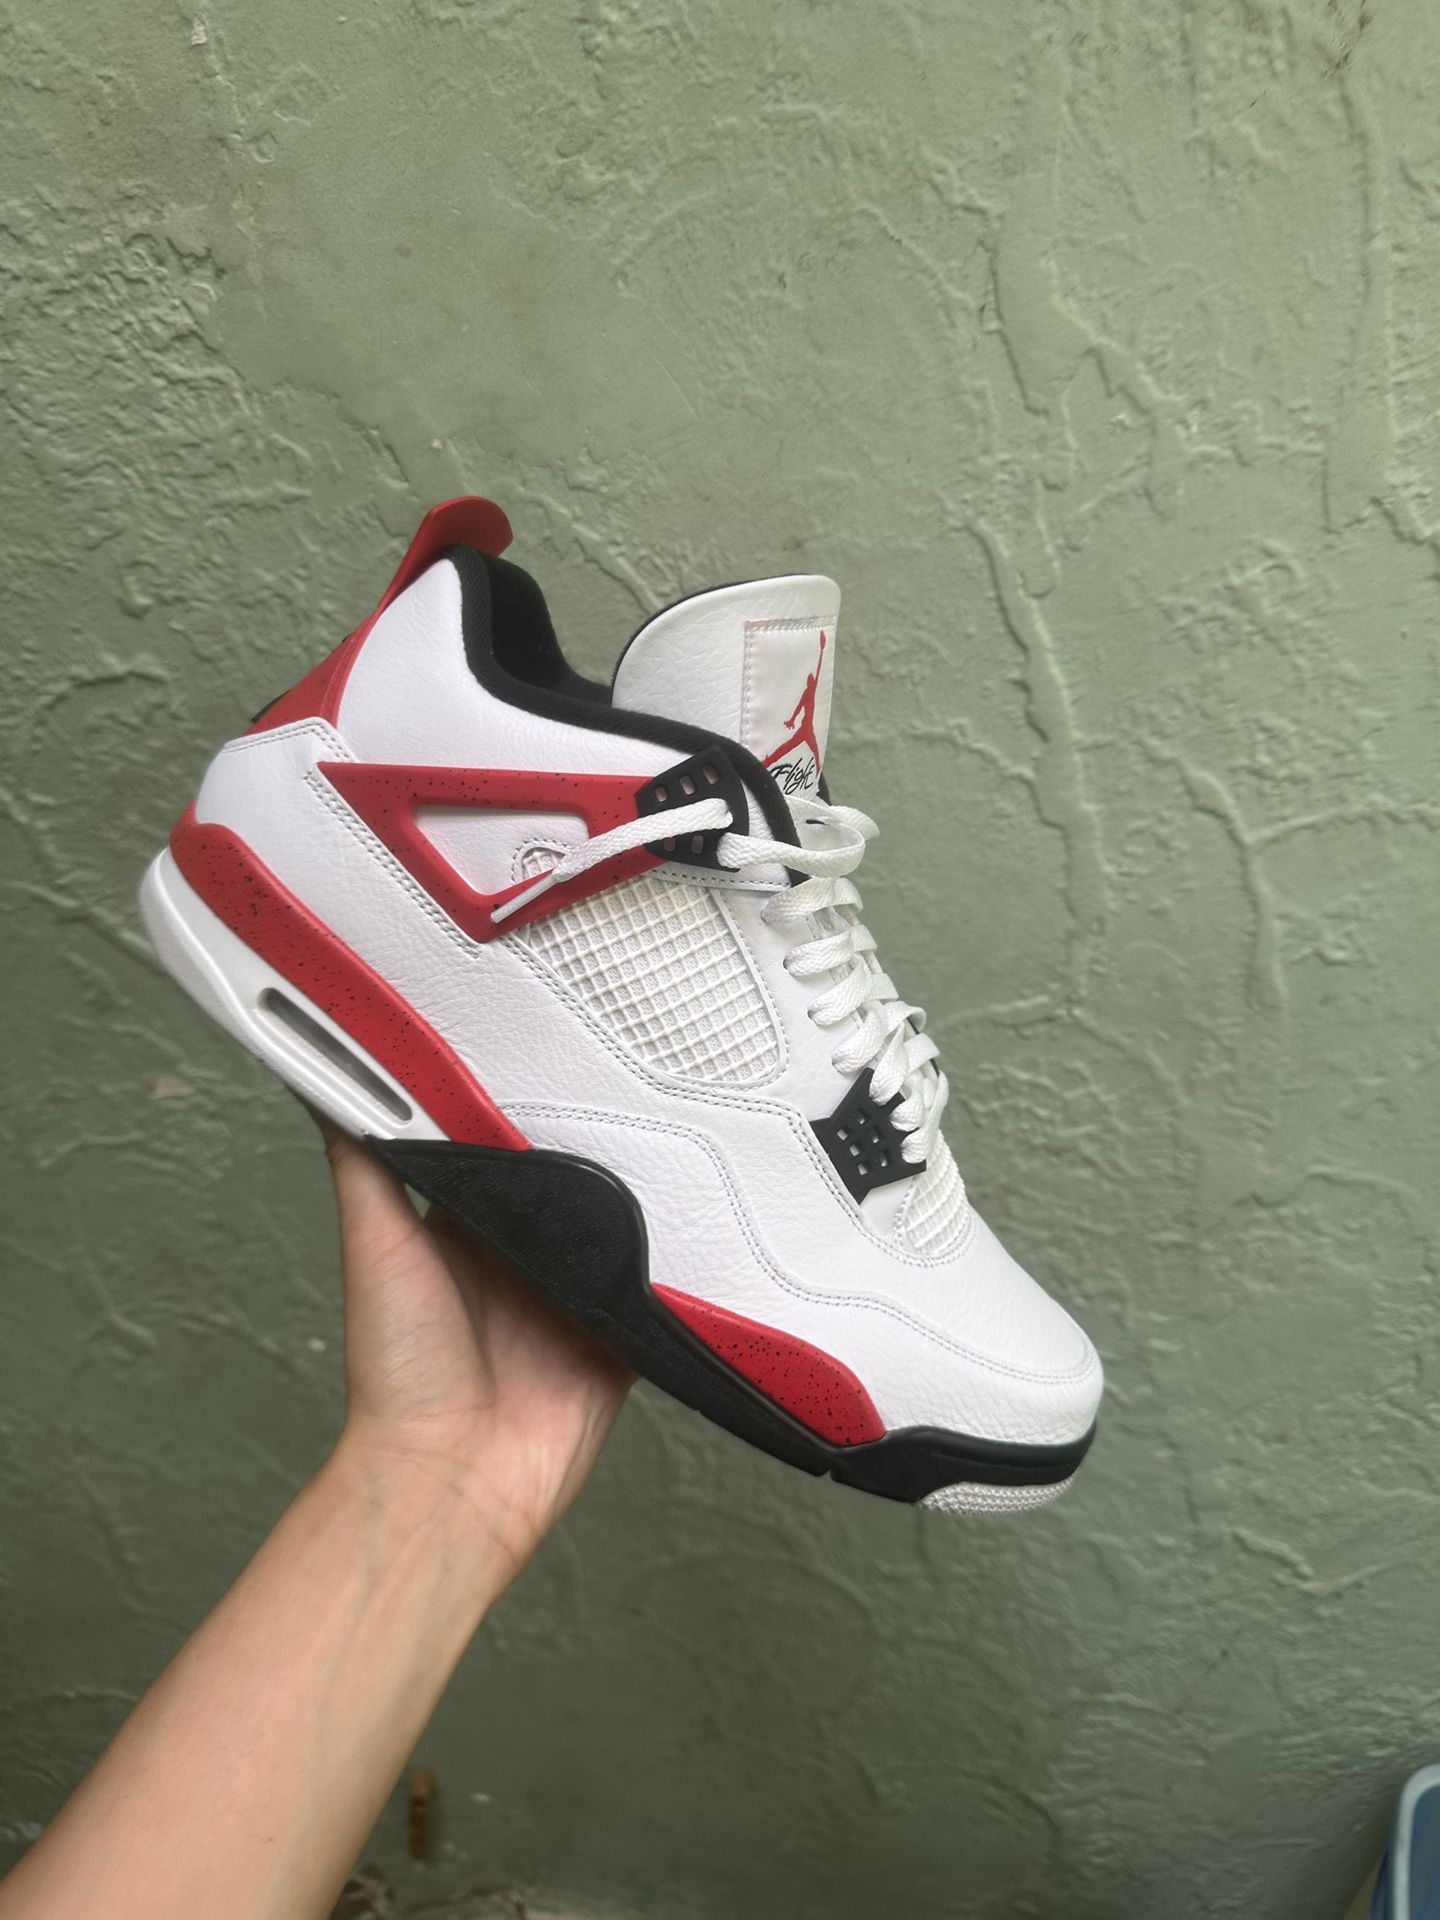 Air Jordan 4 Red Cement Size 13